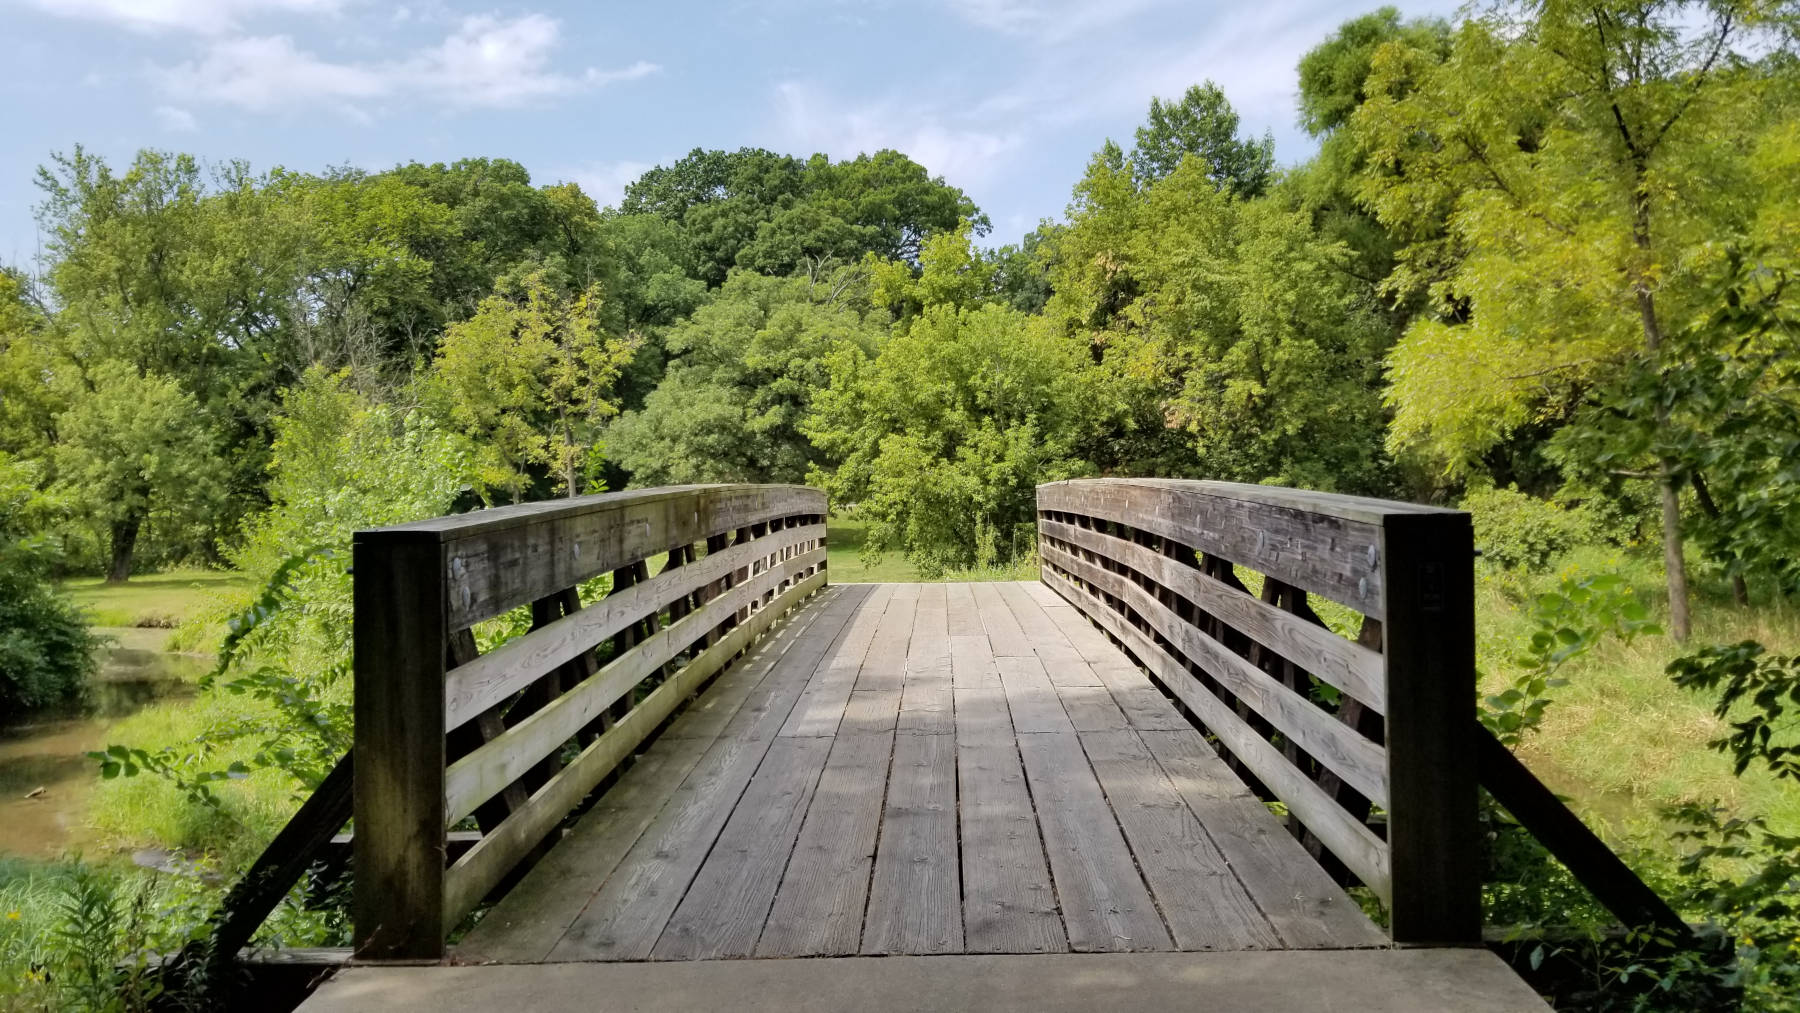 Hiking across a bridge in a scenic Illinois park